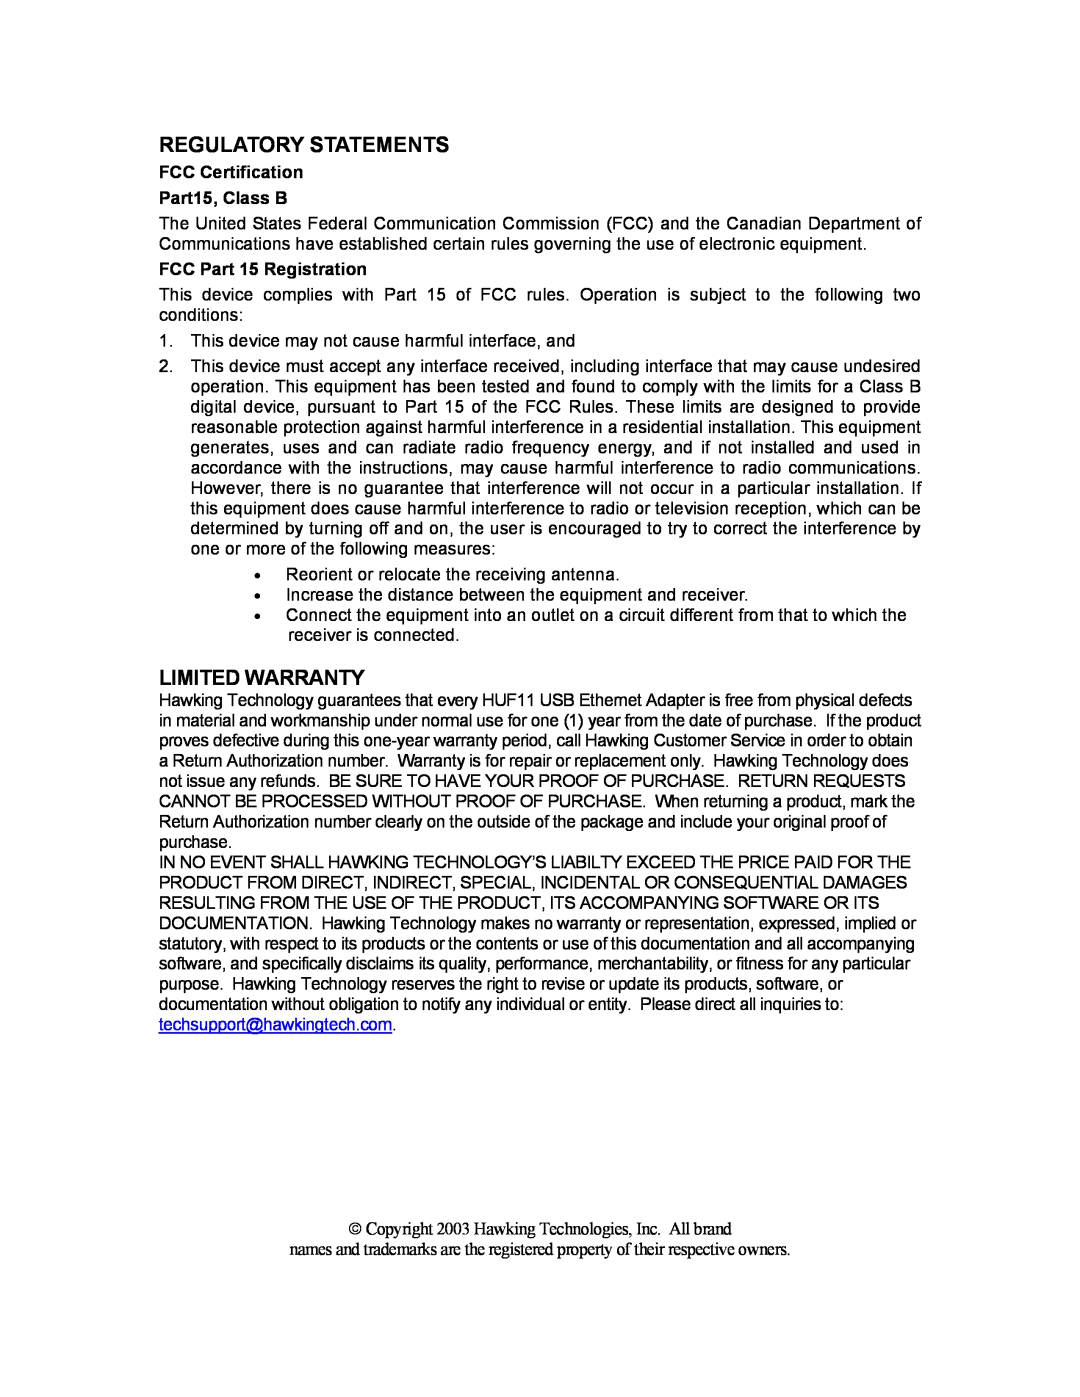 Hawking Technology USB 10/100 Mbps user manual Regulatory Statements, Limited Warranty, FCC Certification Part15, Class B 